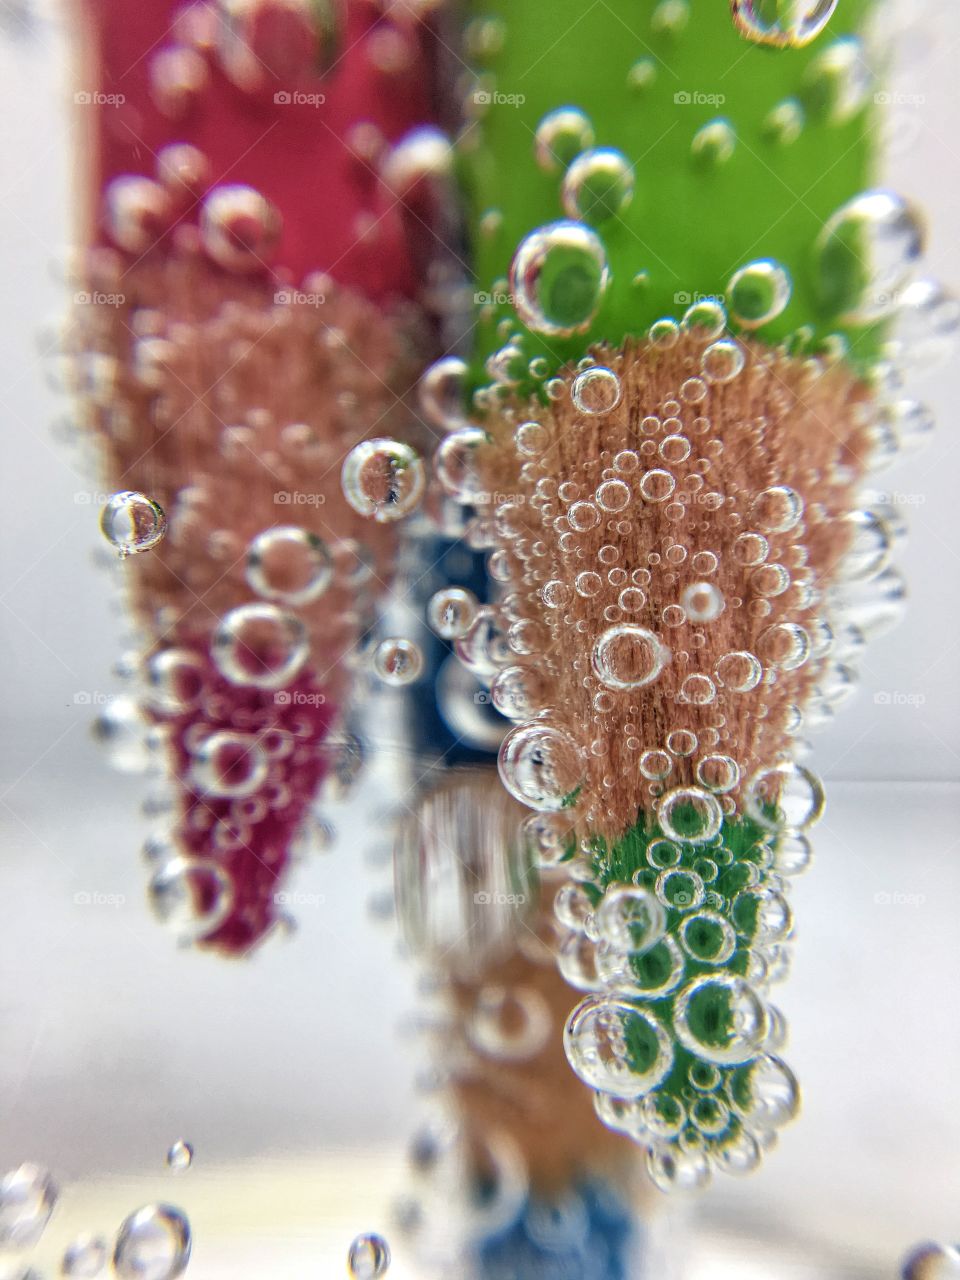 Colored pencil bubbles in water